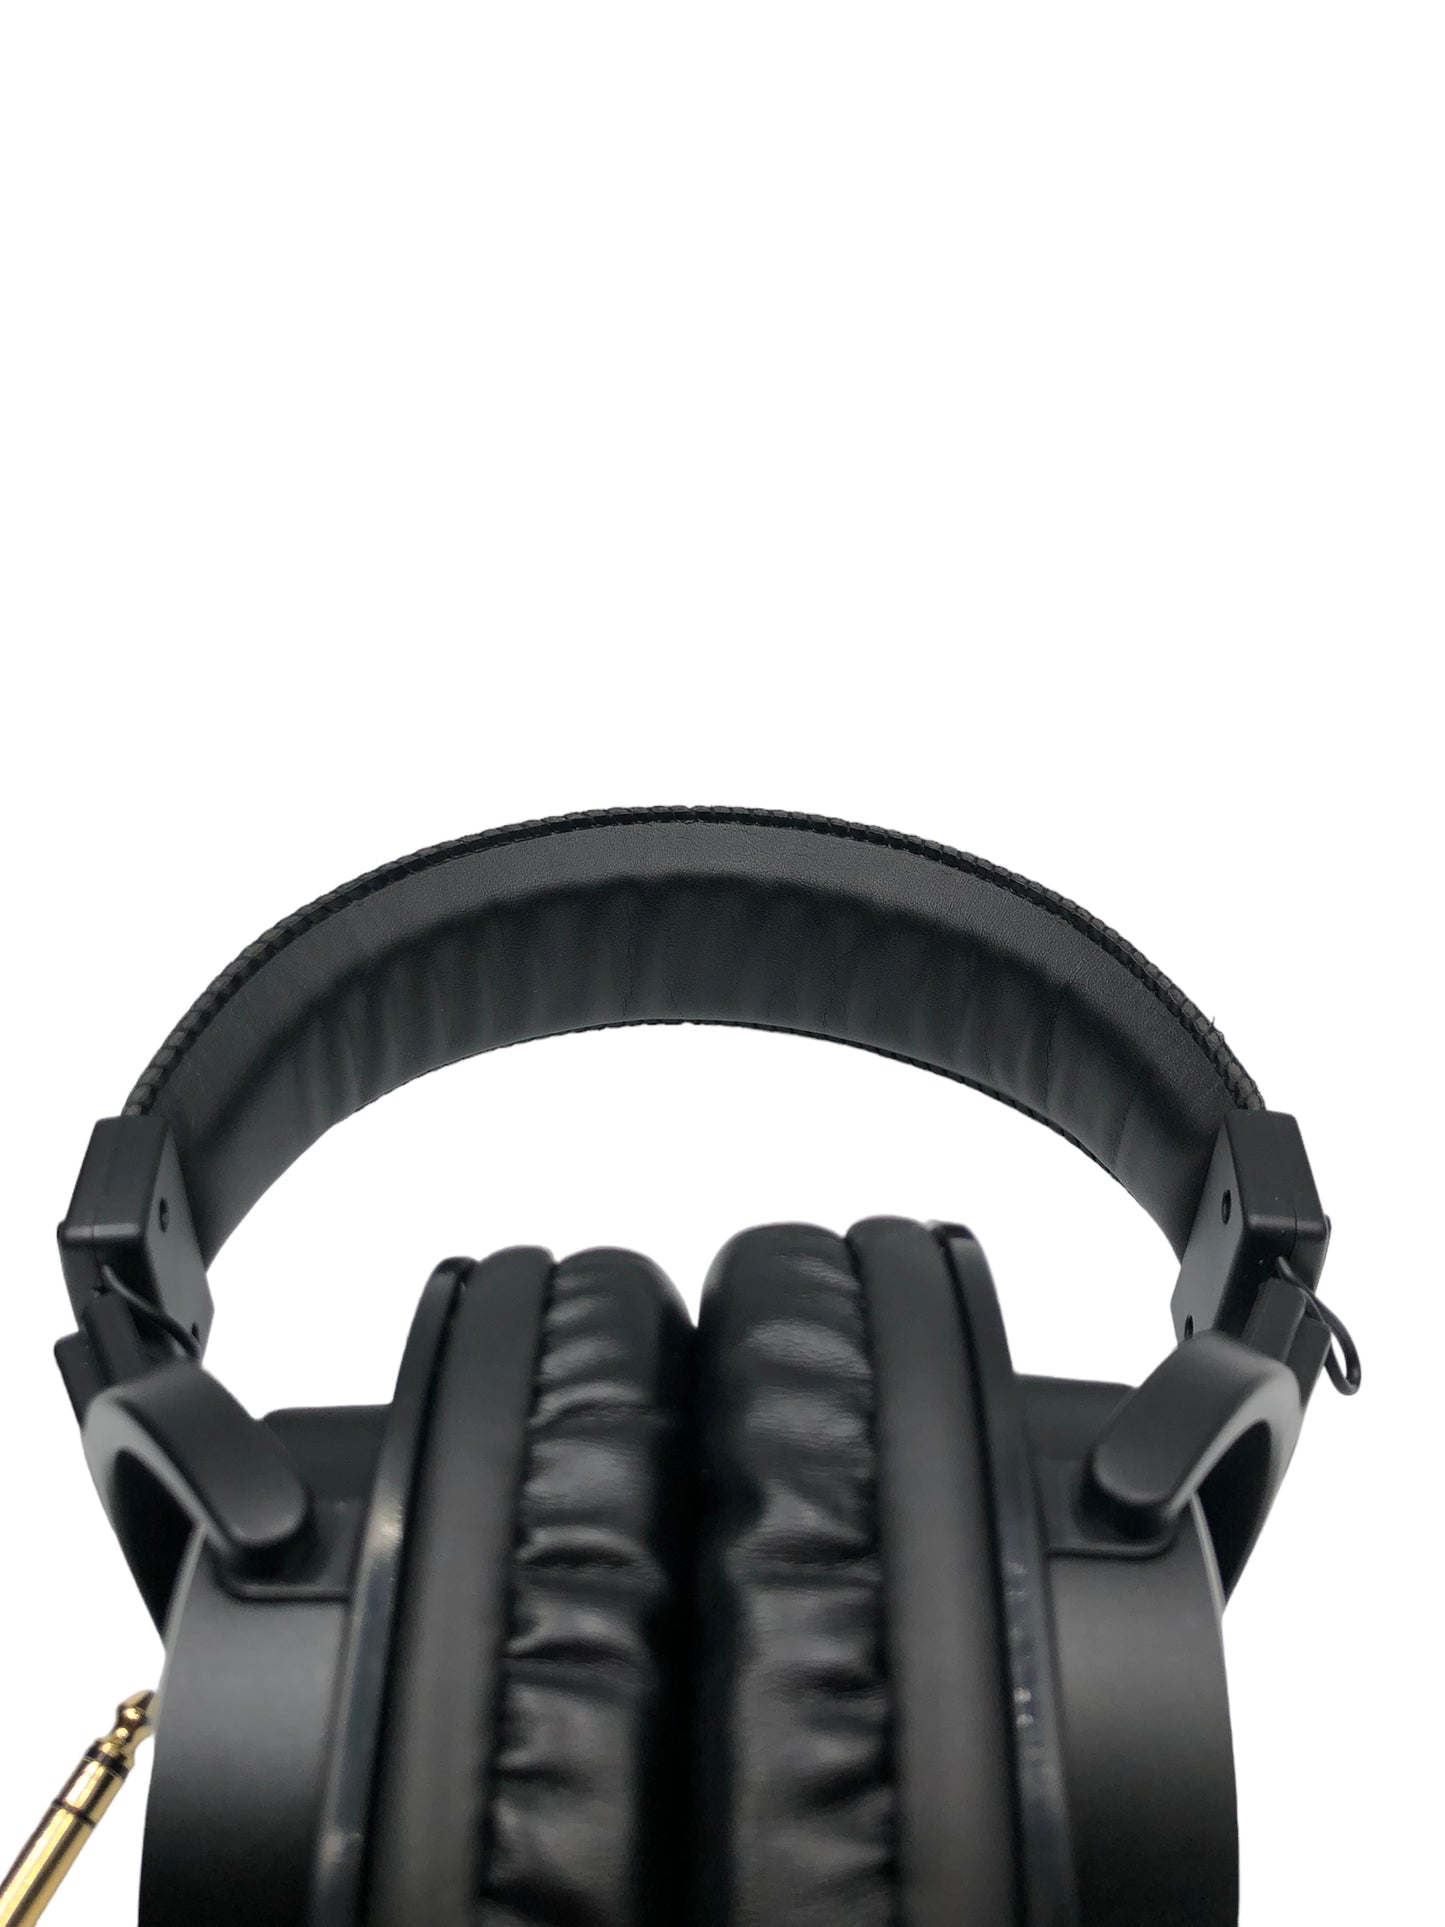 Lyxpro HAS-10 Headphones